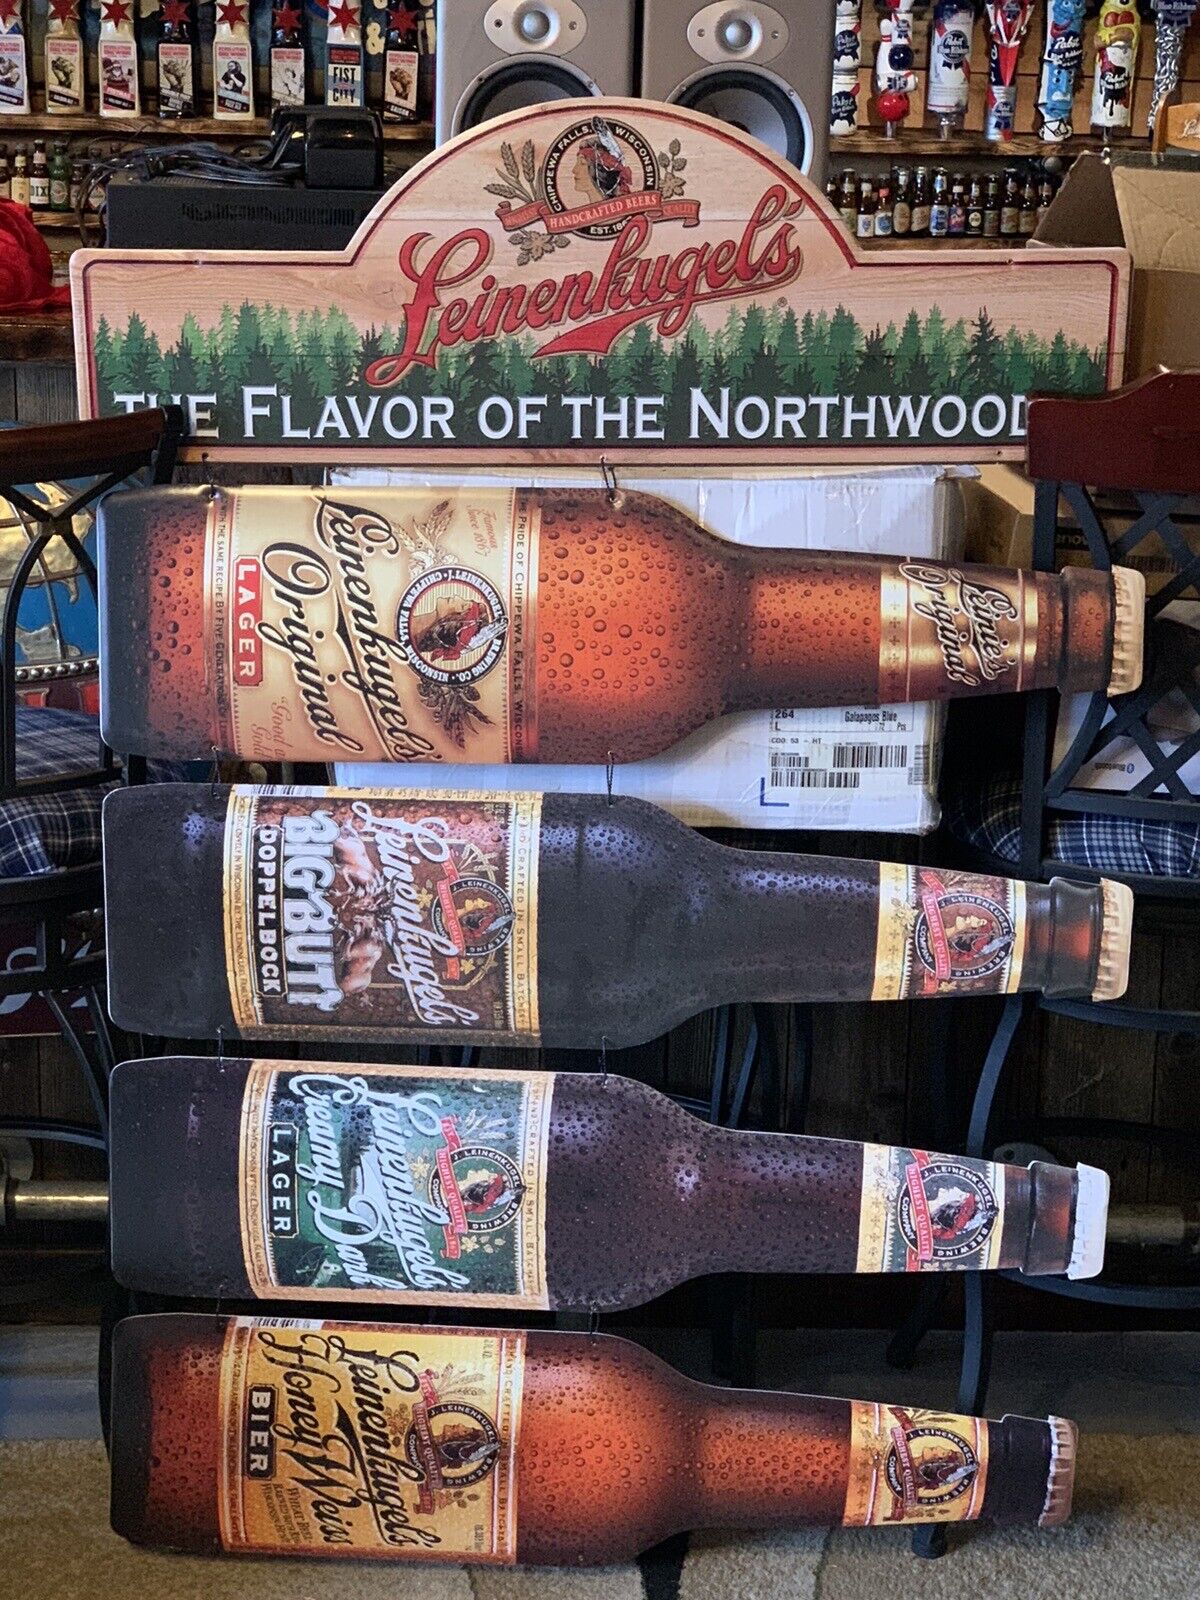 Rare Two-Sided Leinenkugel’s Flavor of the Northwoods Hanging Beer Bottles Sign